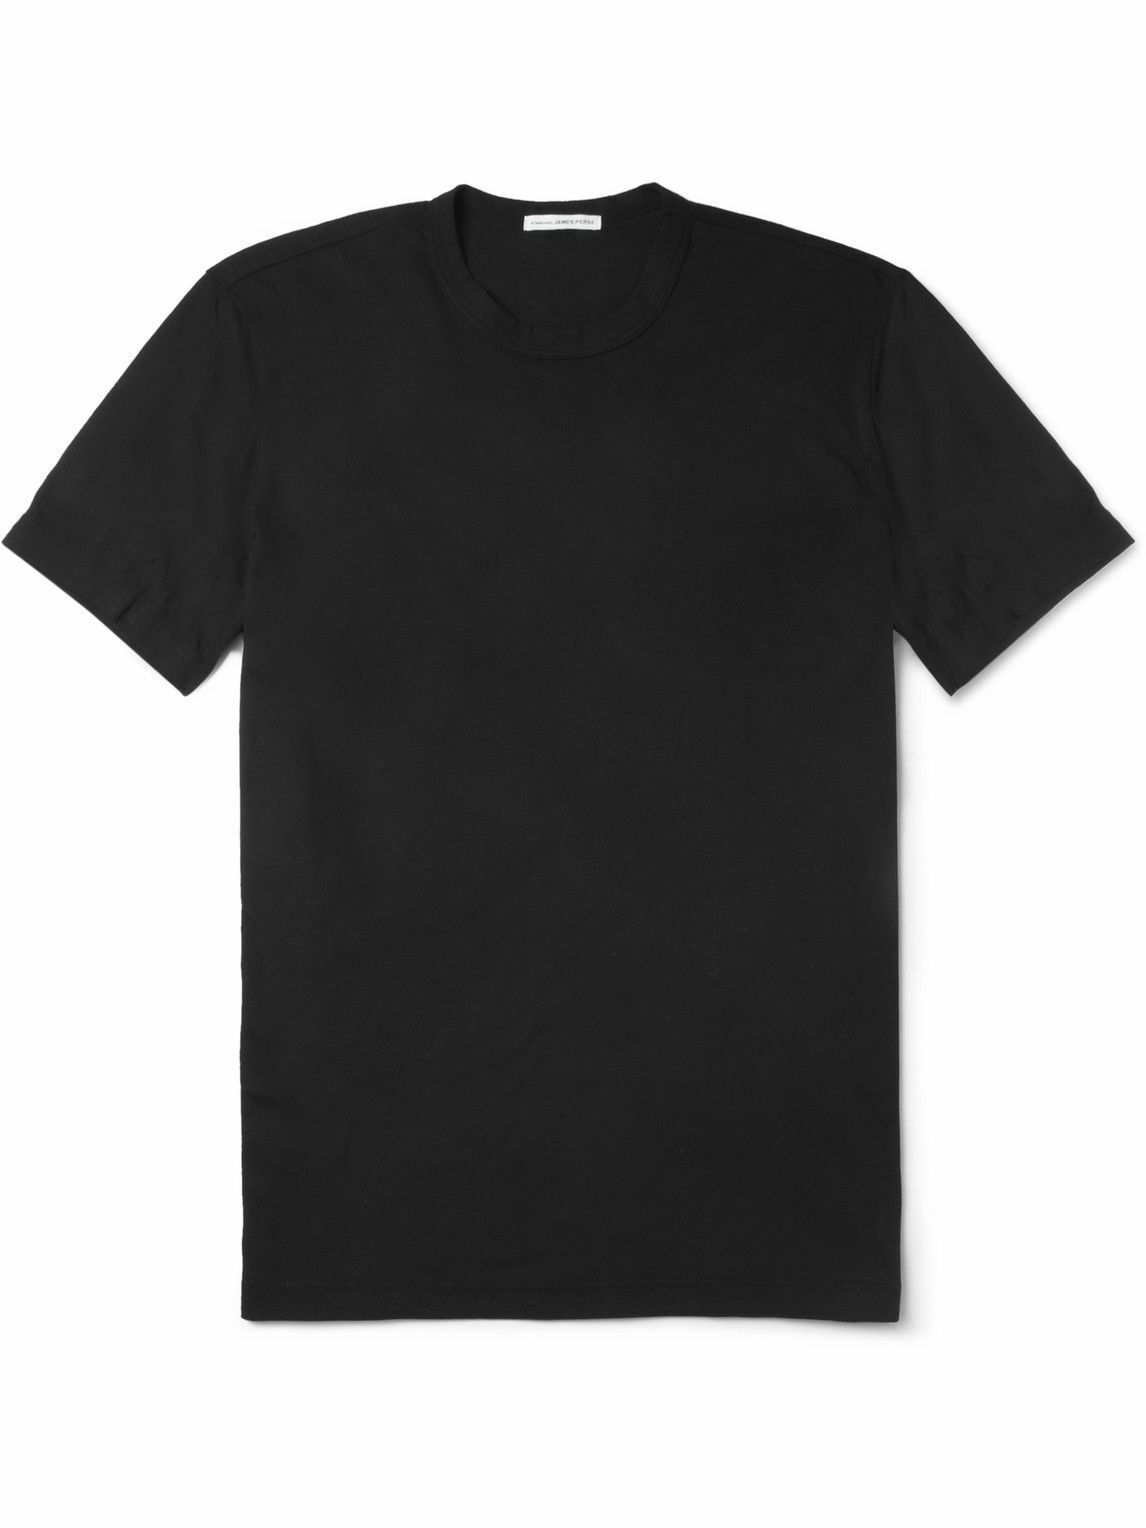 James Perse - Crew-Neck Cotton-Jersey T-Shirt - Black James Perse